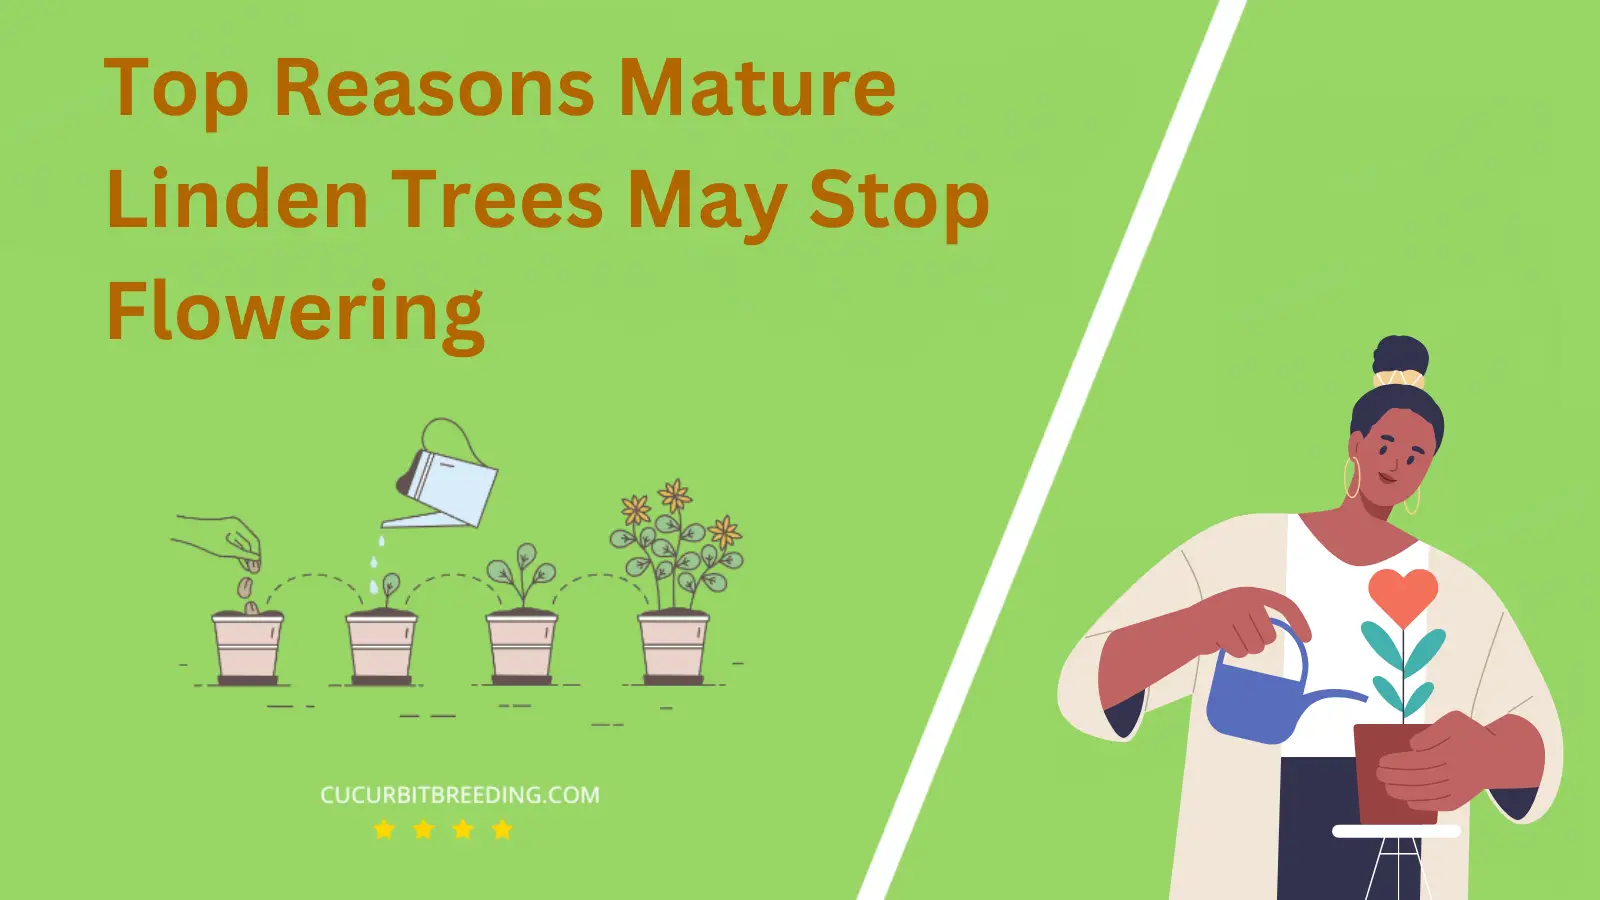 Top Reasons Mature Linden Trees May Stop Flowering